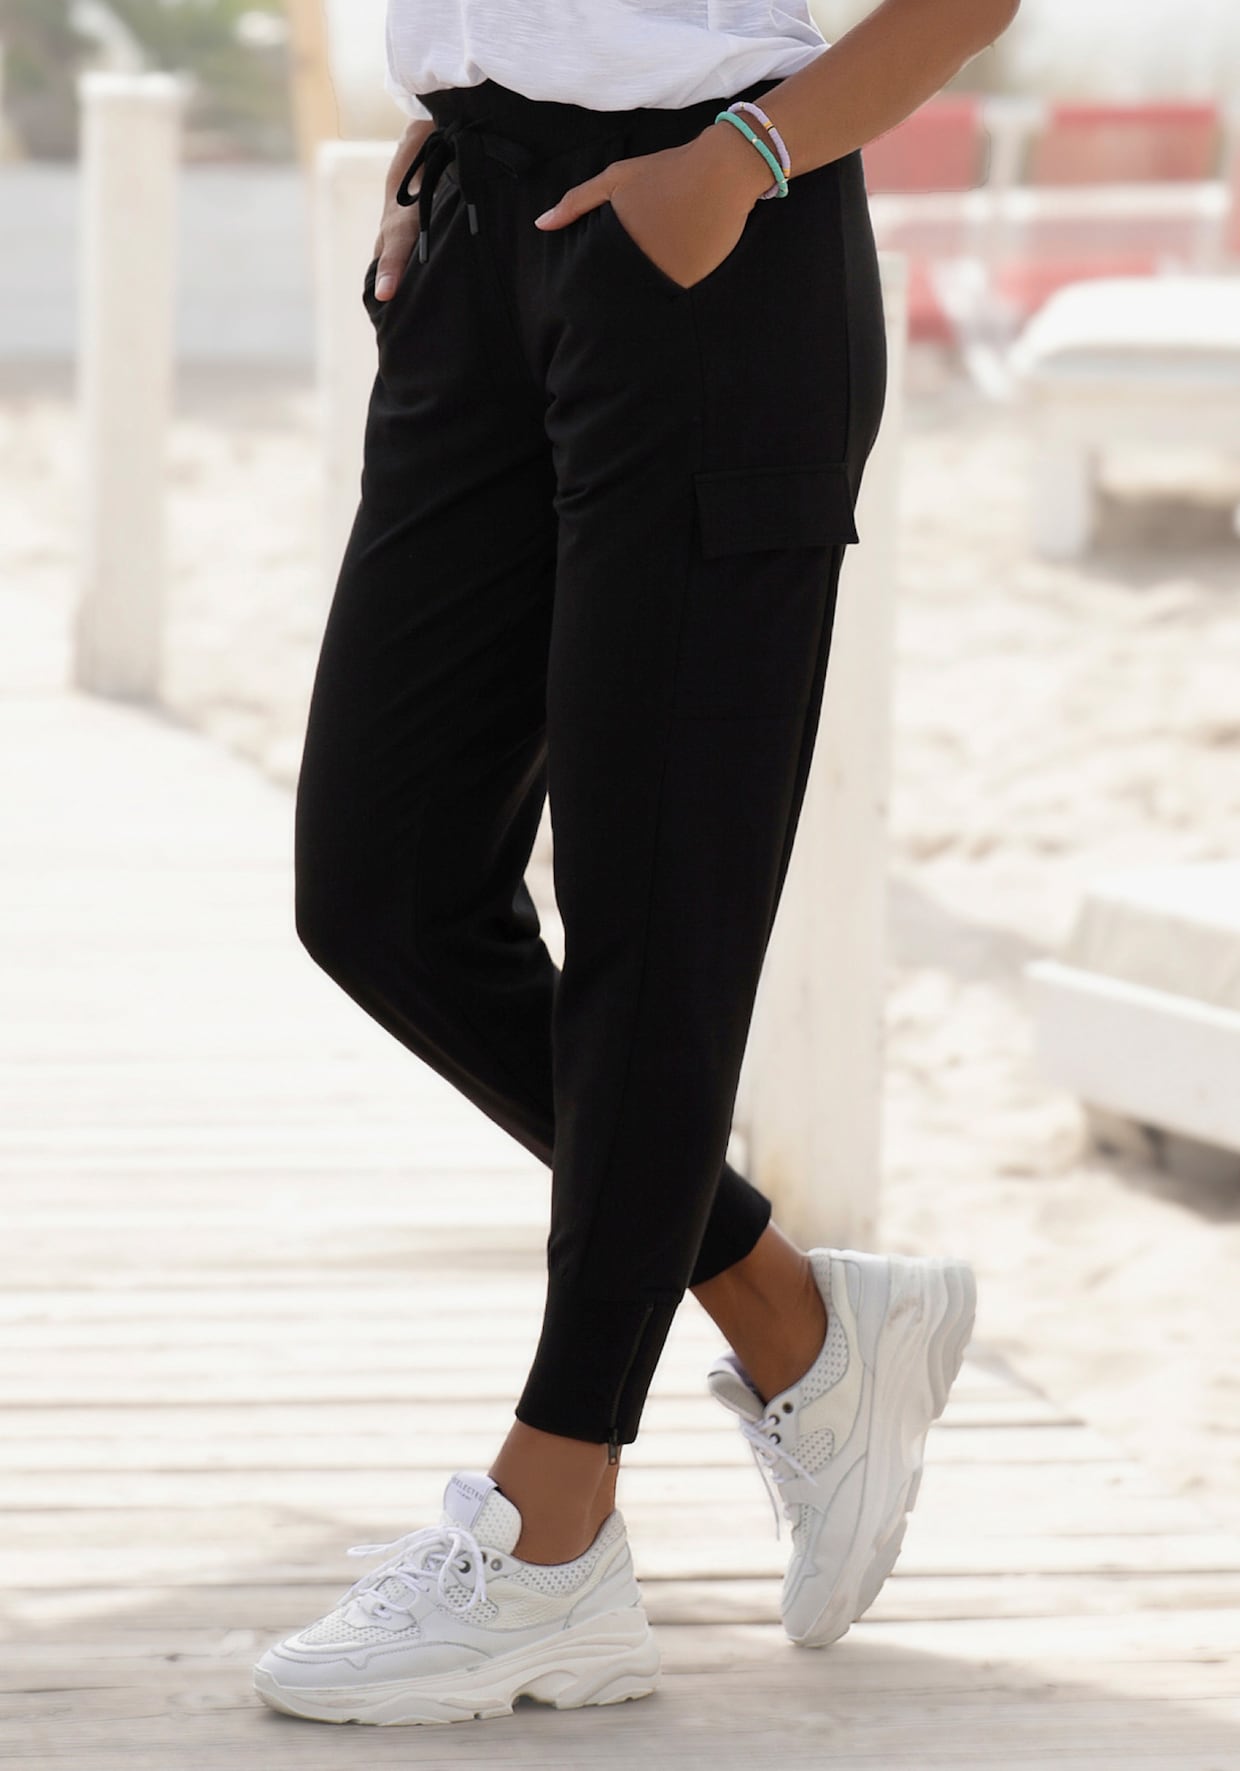 Venice Beach Joggingbroek - zwart